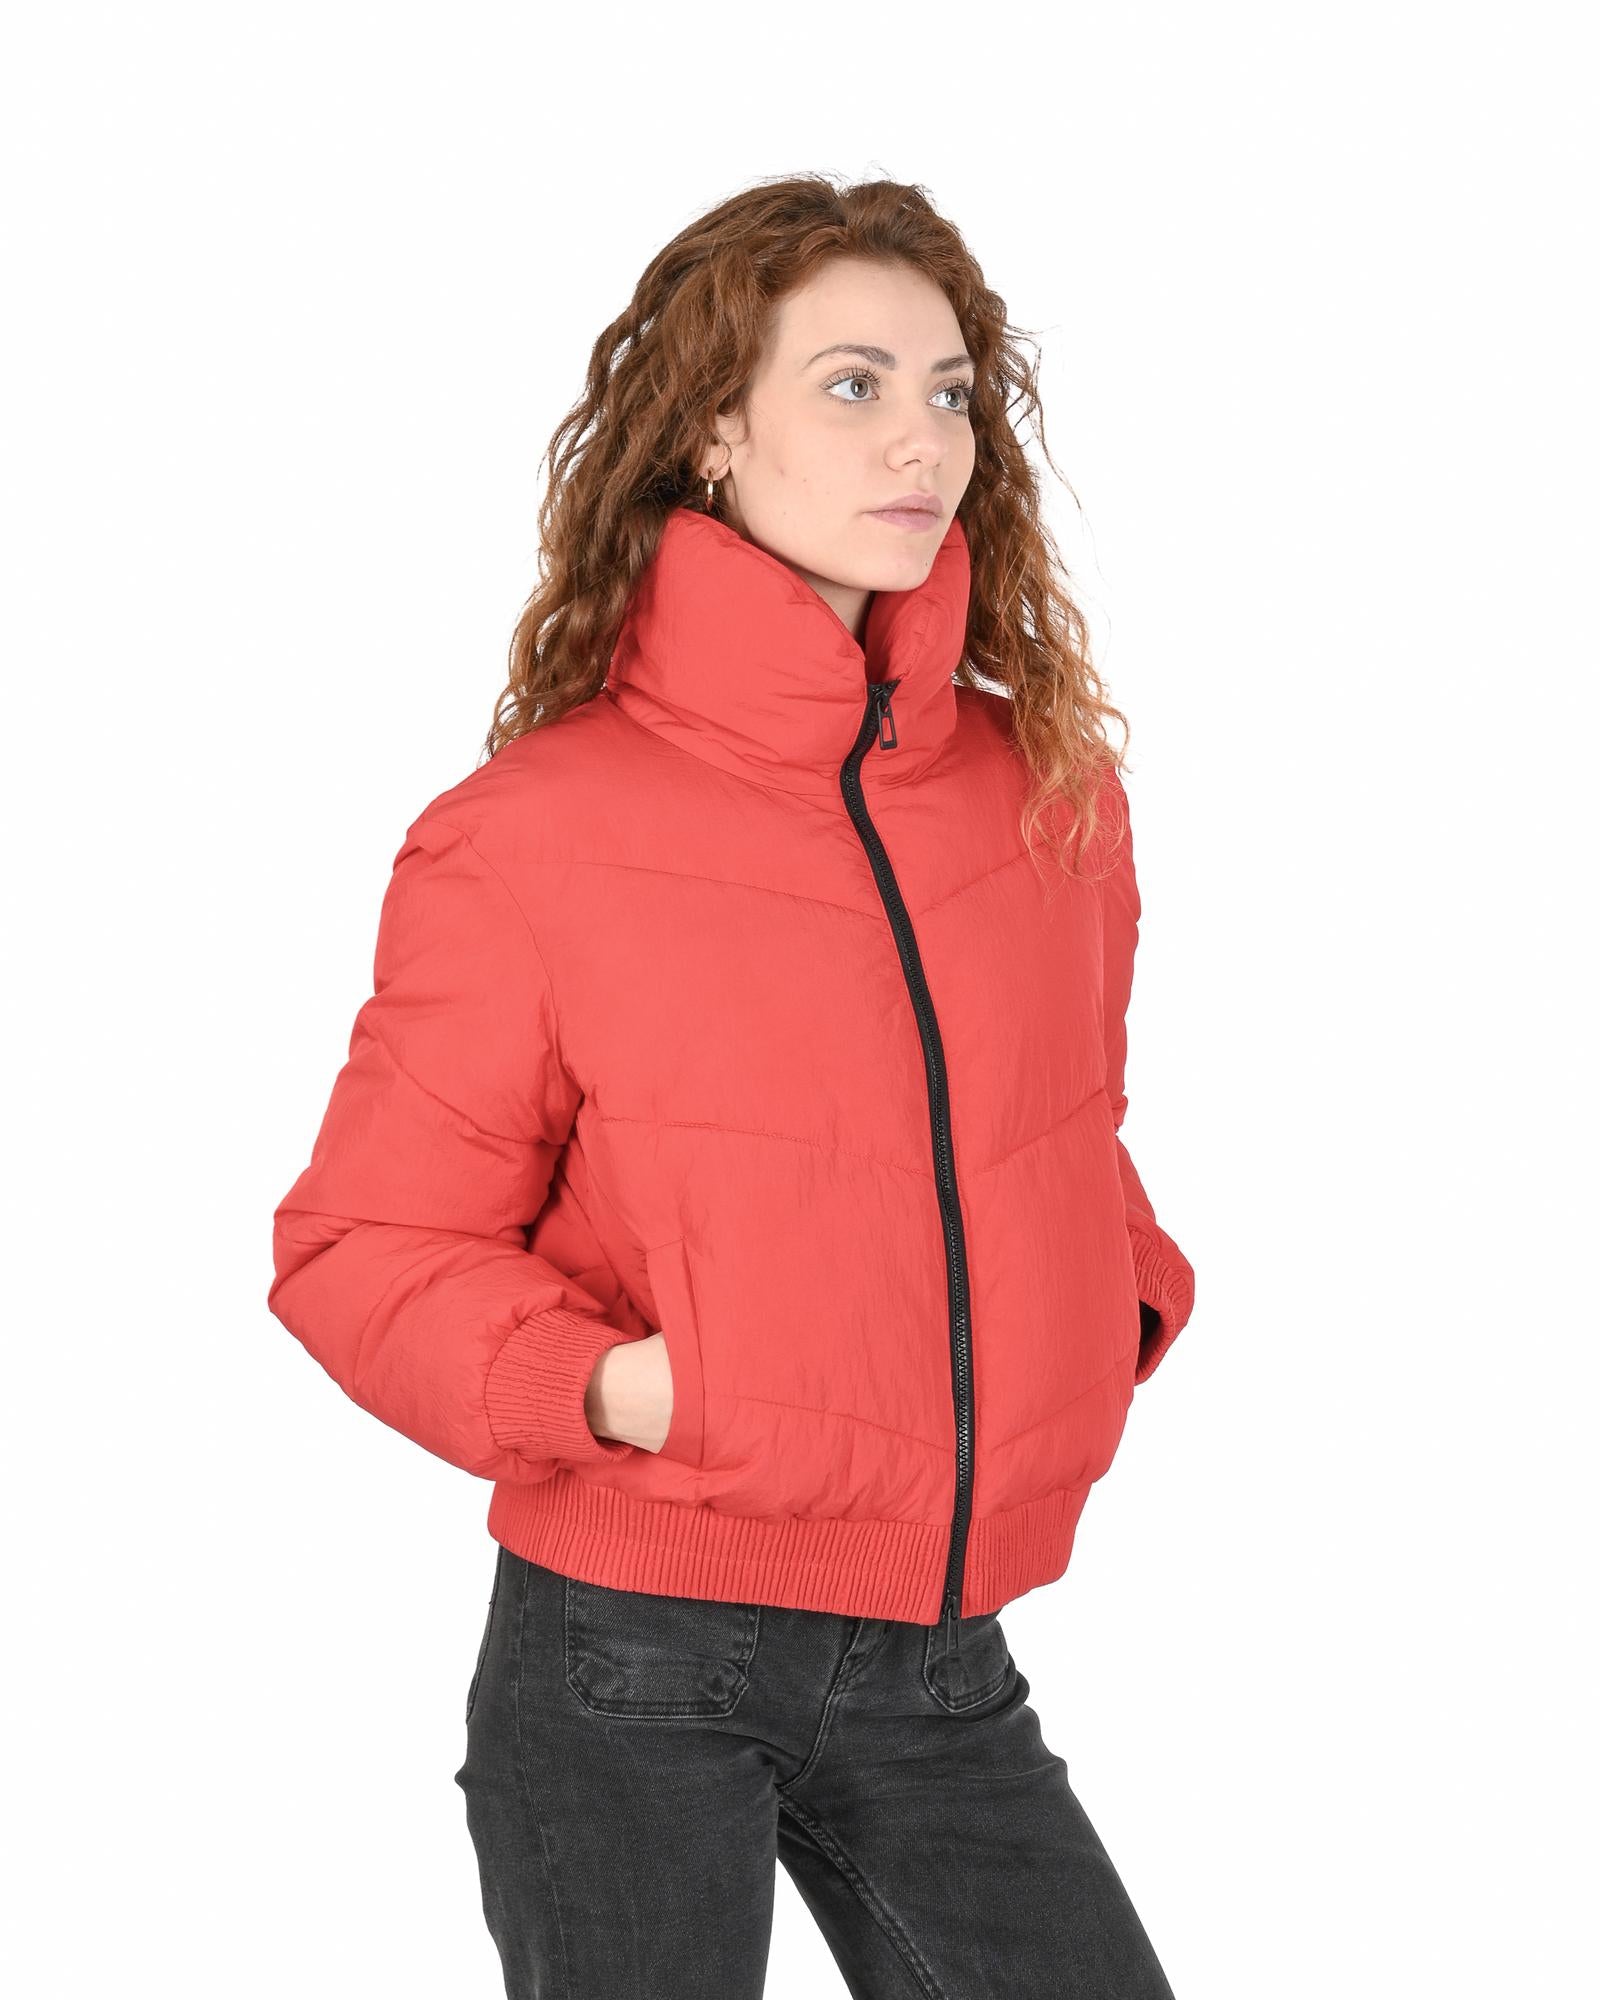 Hugo Boss Women's Red Polyamide Jacket in Red - L